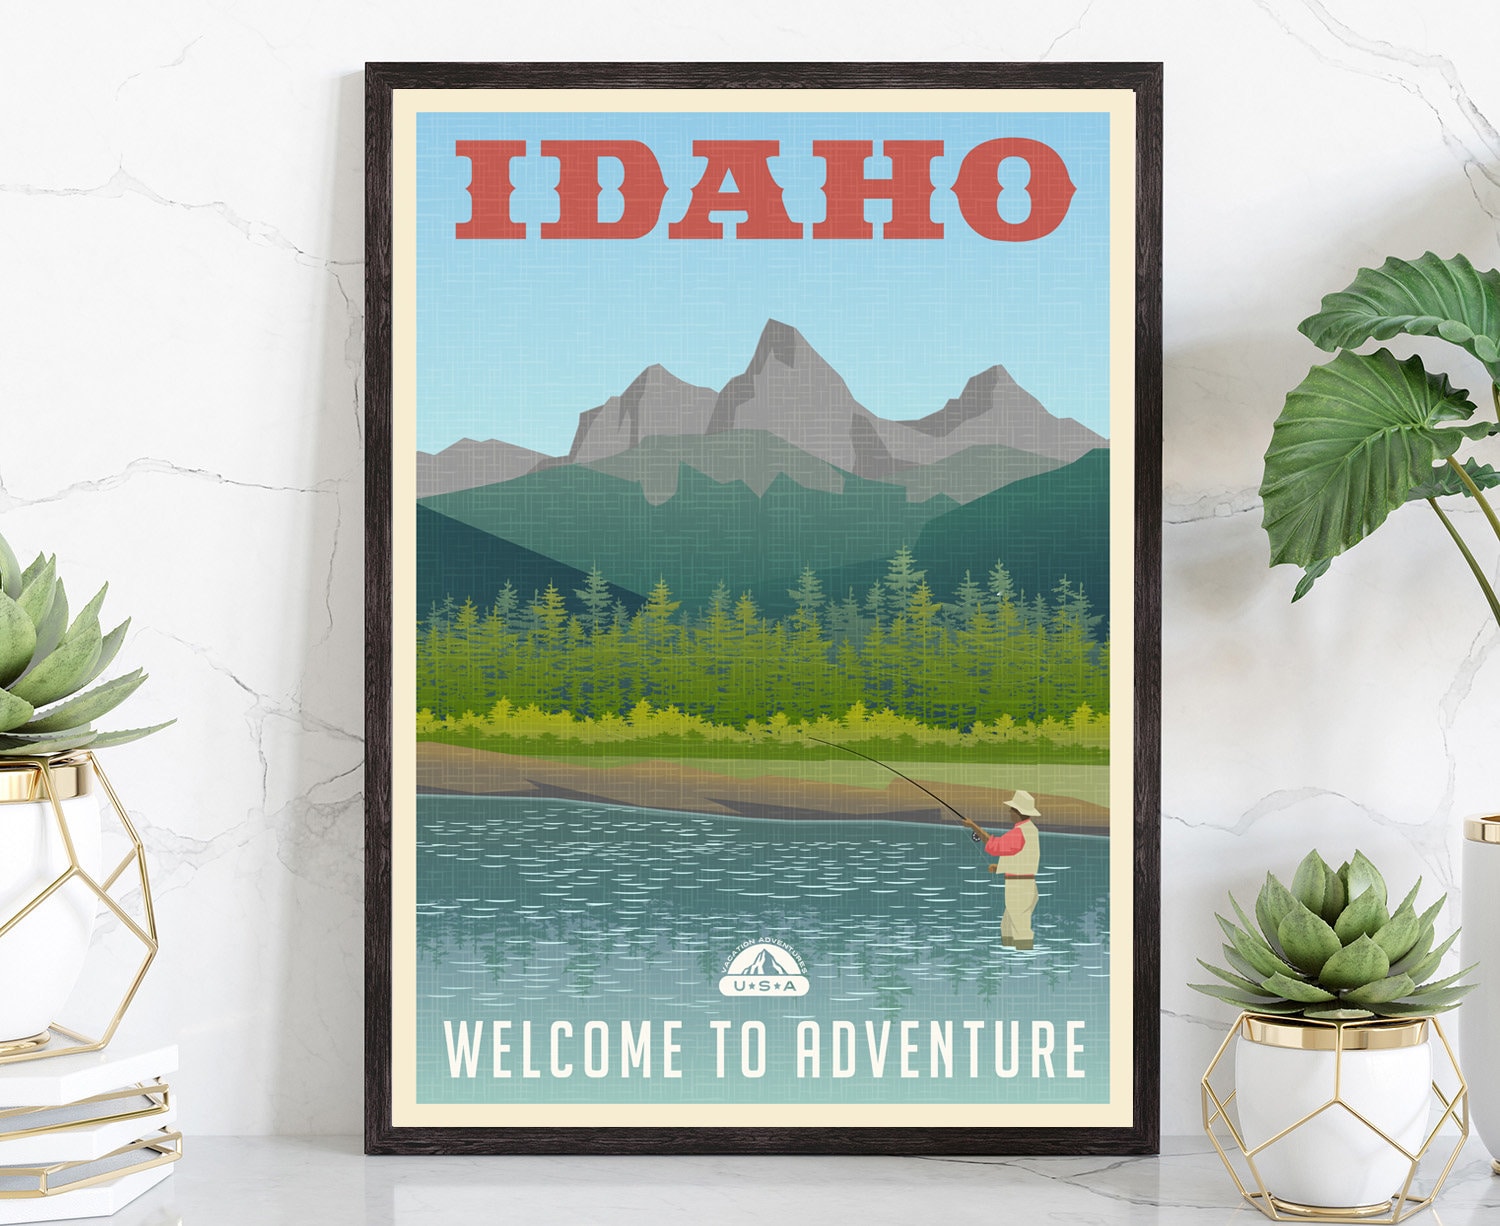 Idaho Vintage Rustic Poster Print, Retro Style Travel Poster